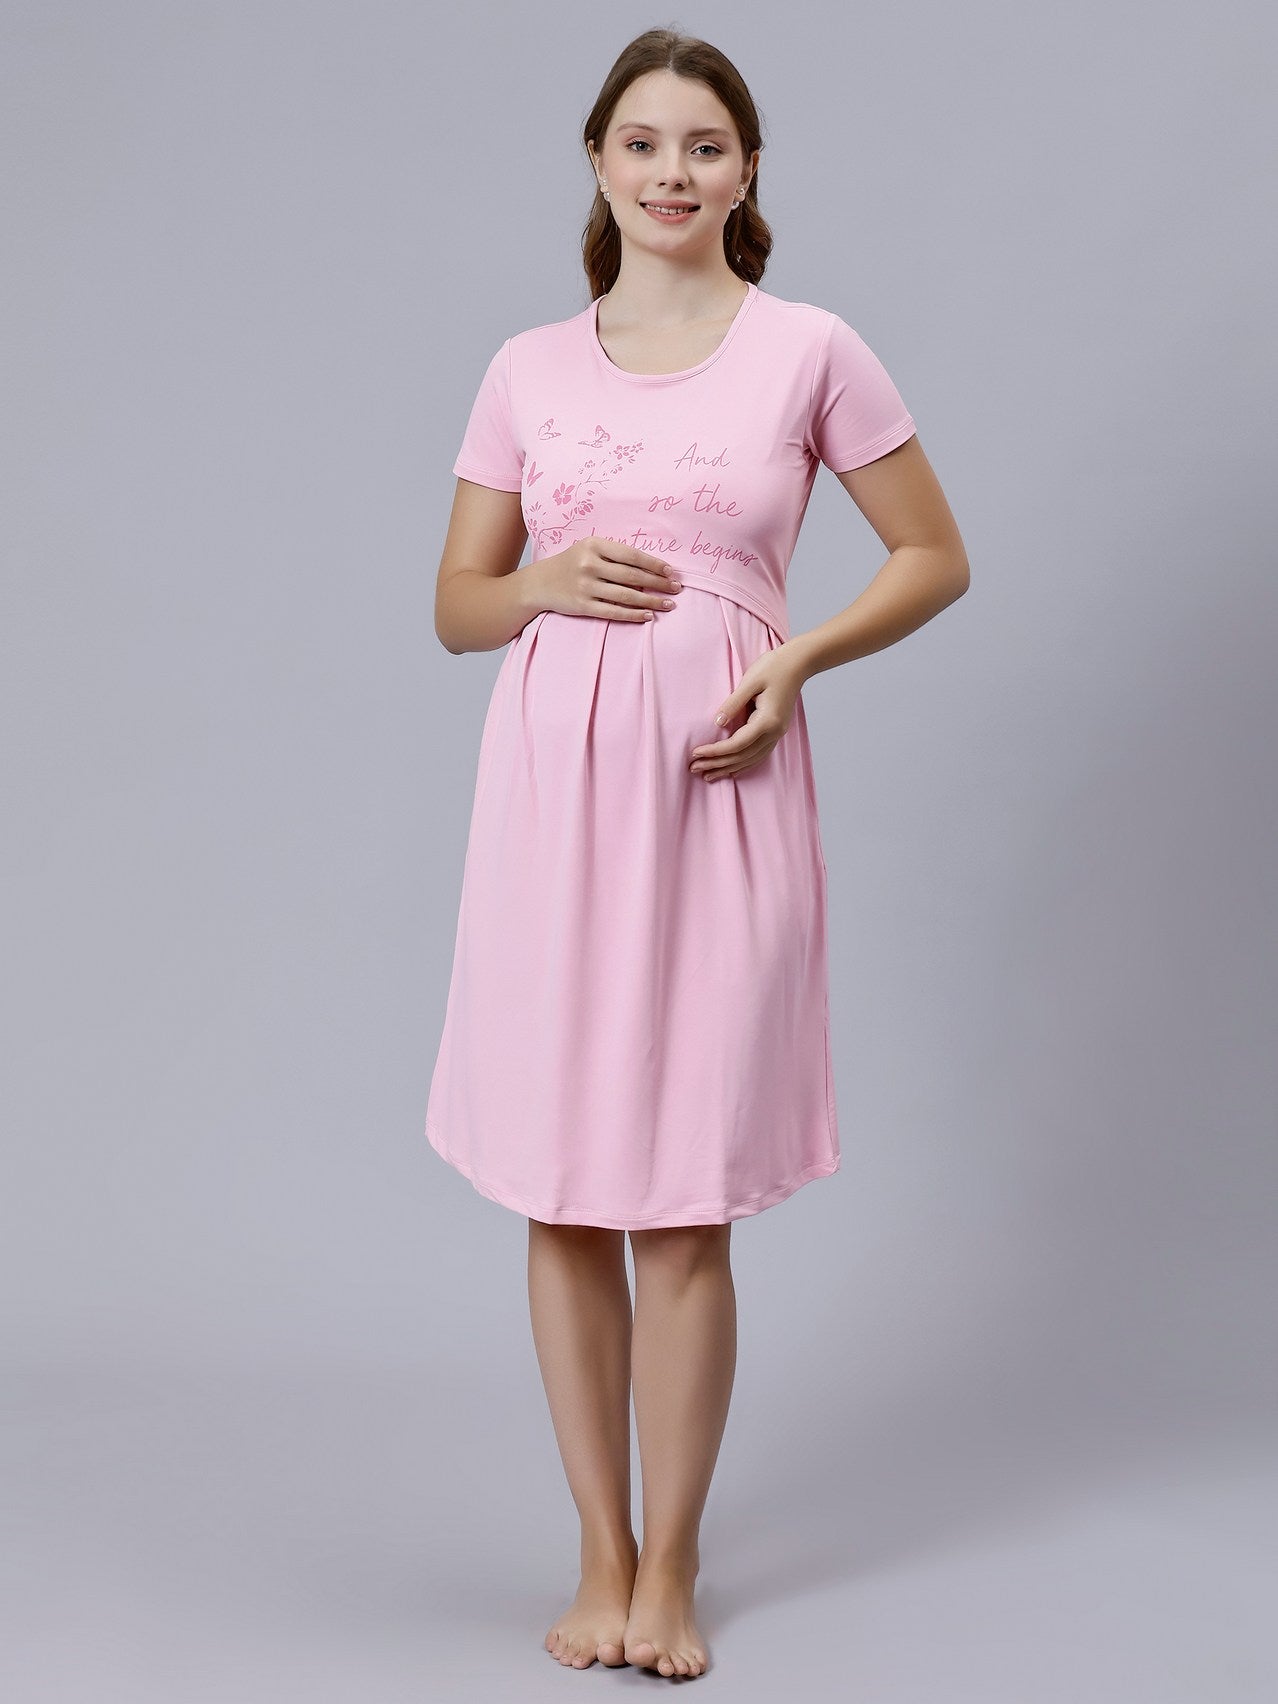 Fashion Forward Zipless Pregnancy Dress